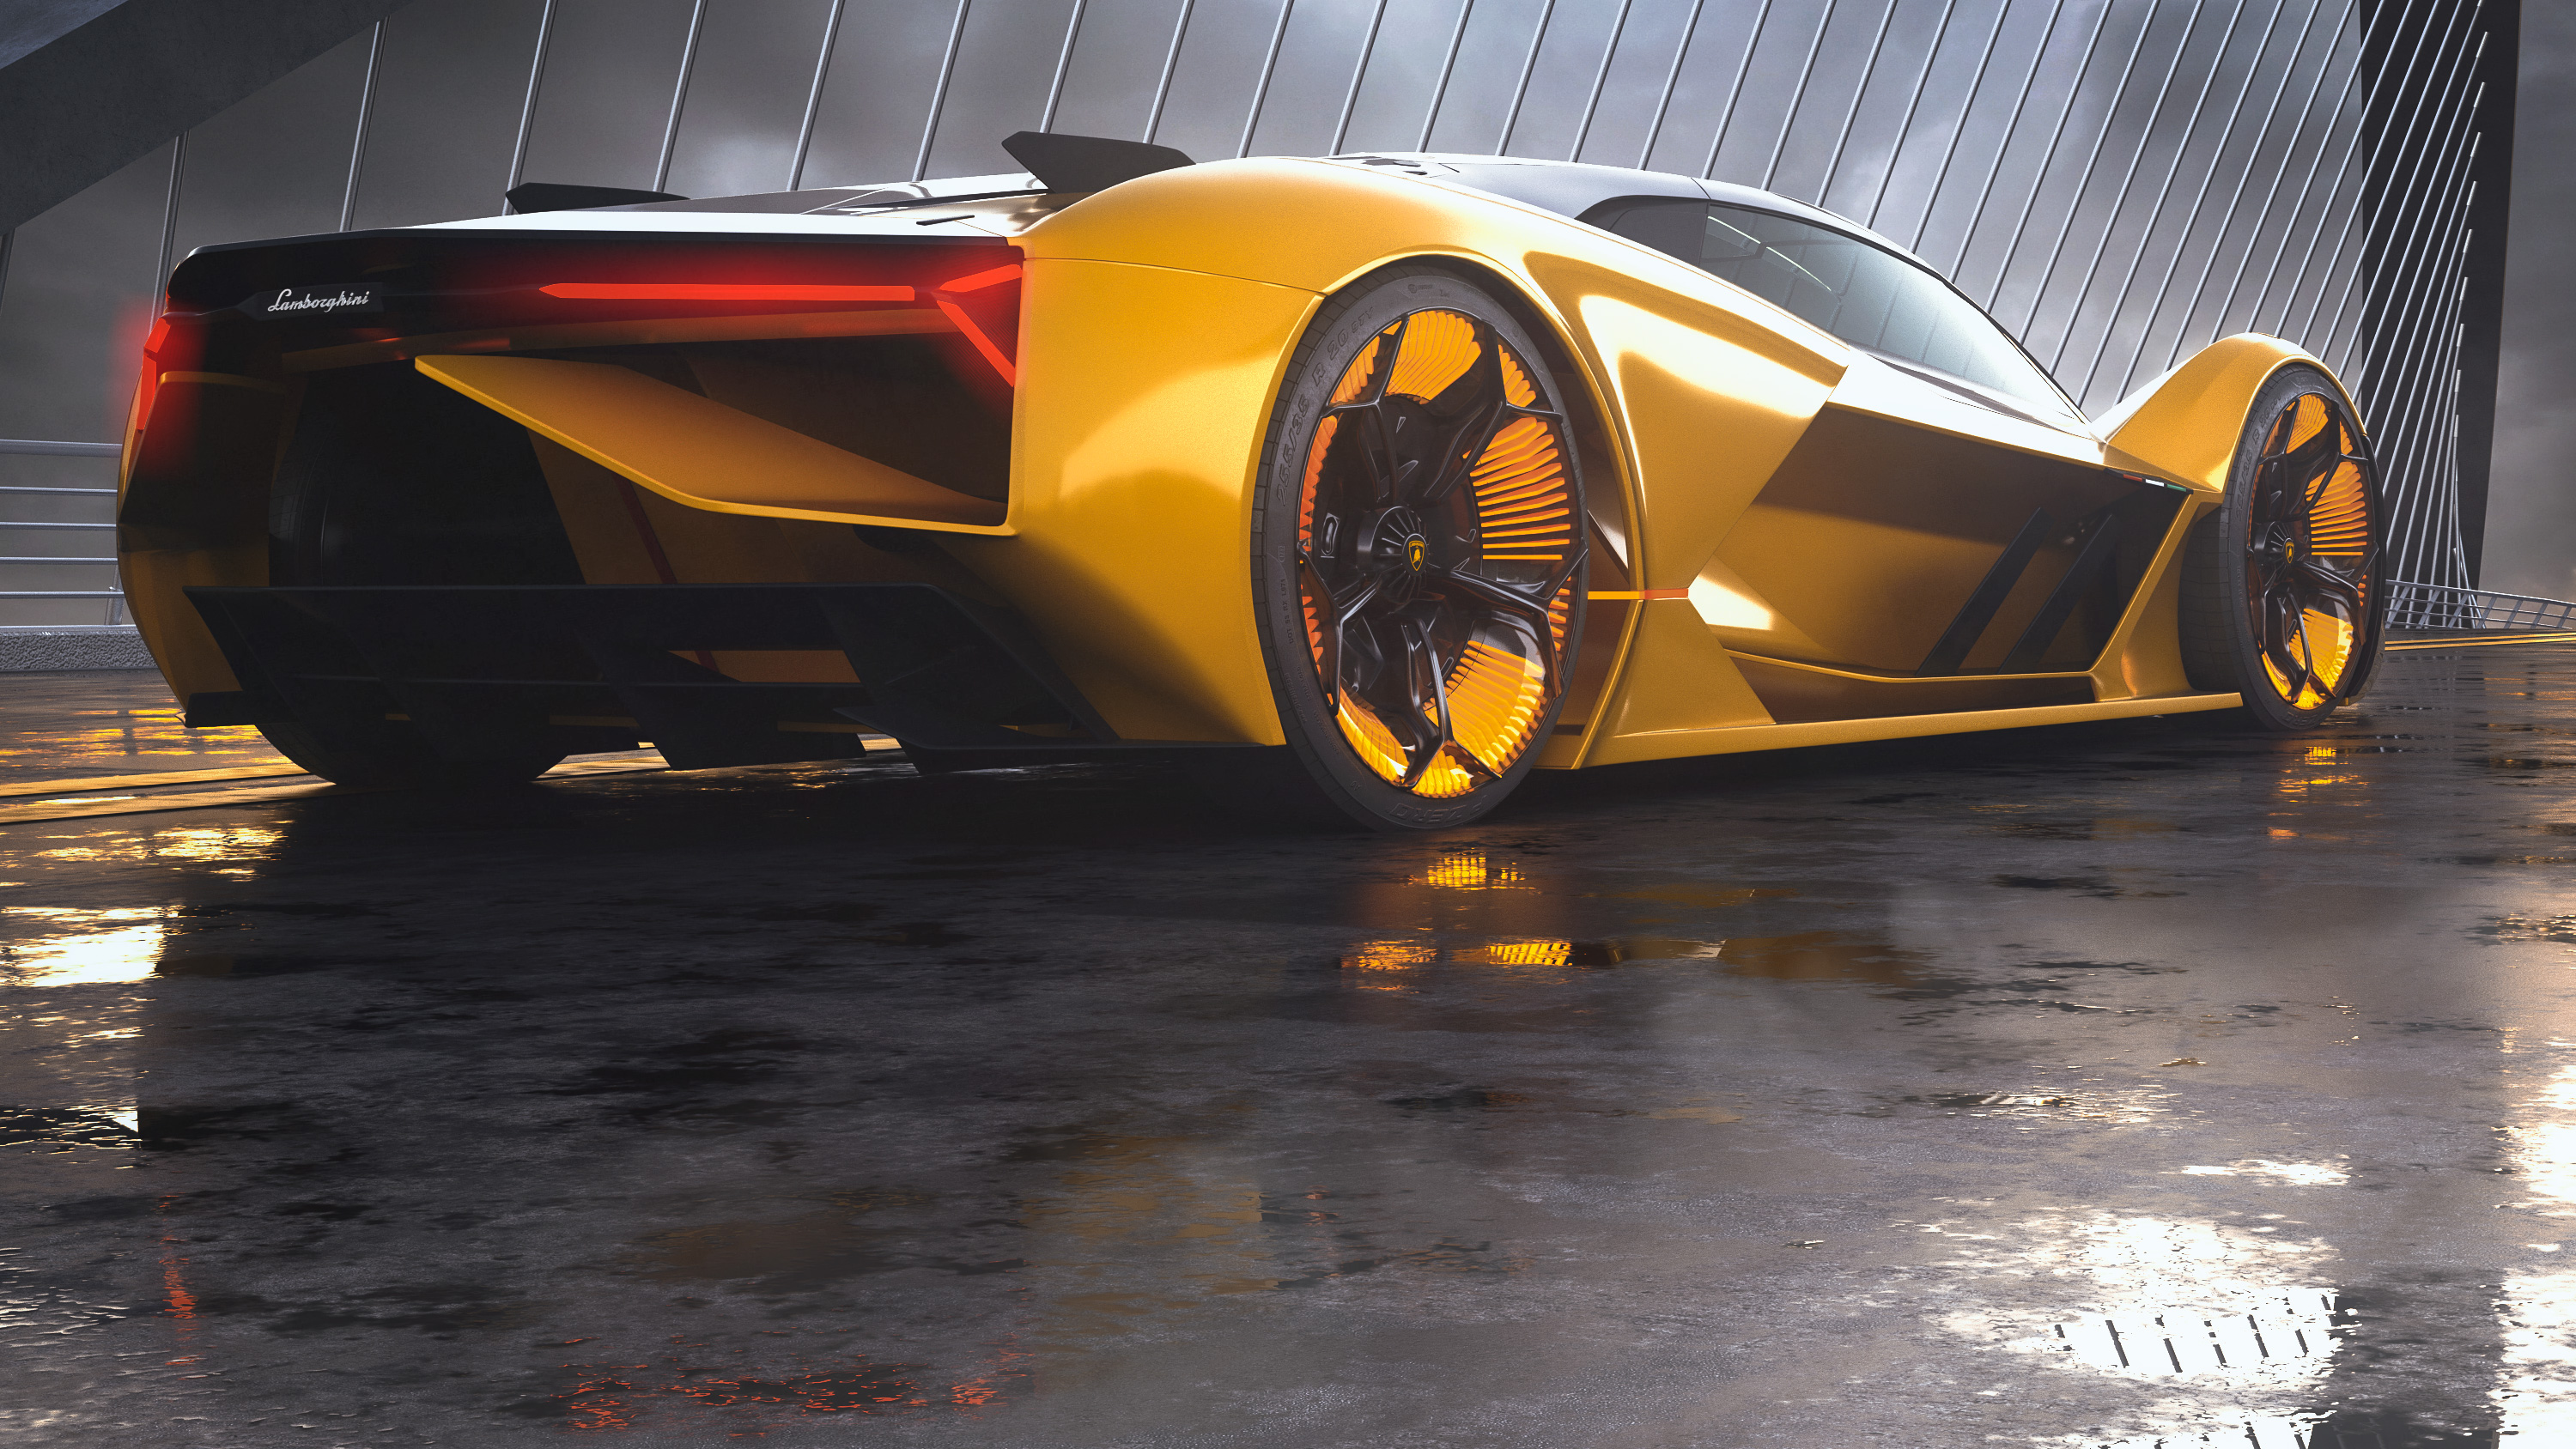 2019 Lamborghini Terzo Millennio Rear, HD Cars, 4k Wallpapers, Images